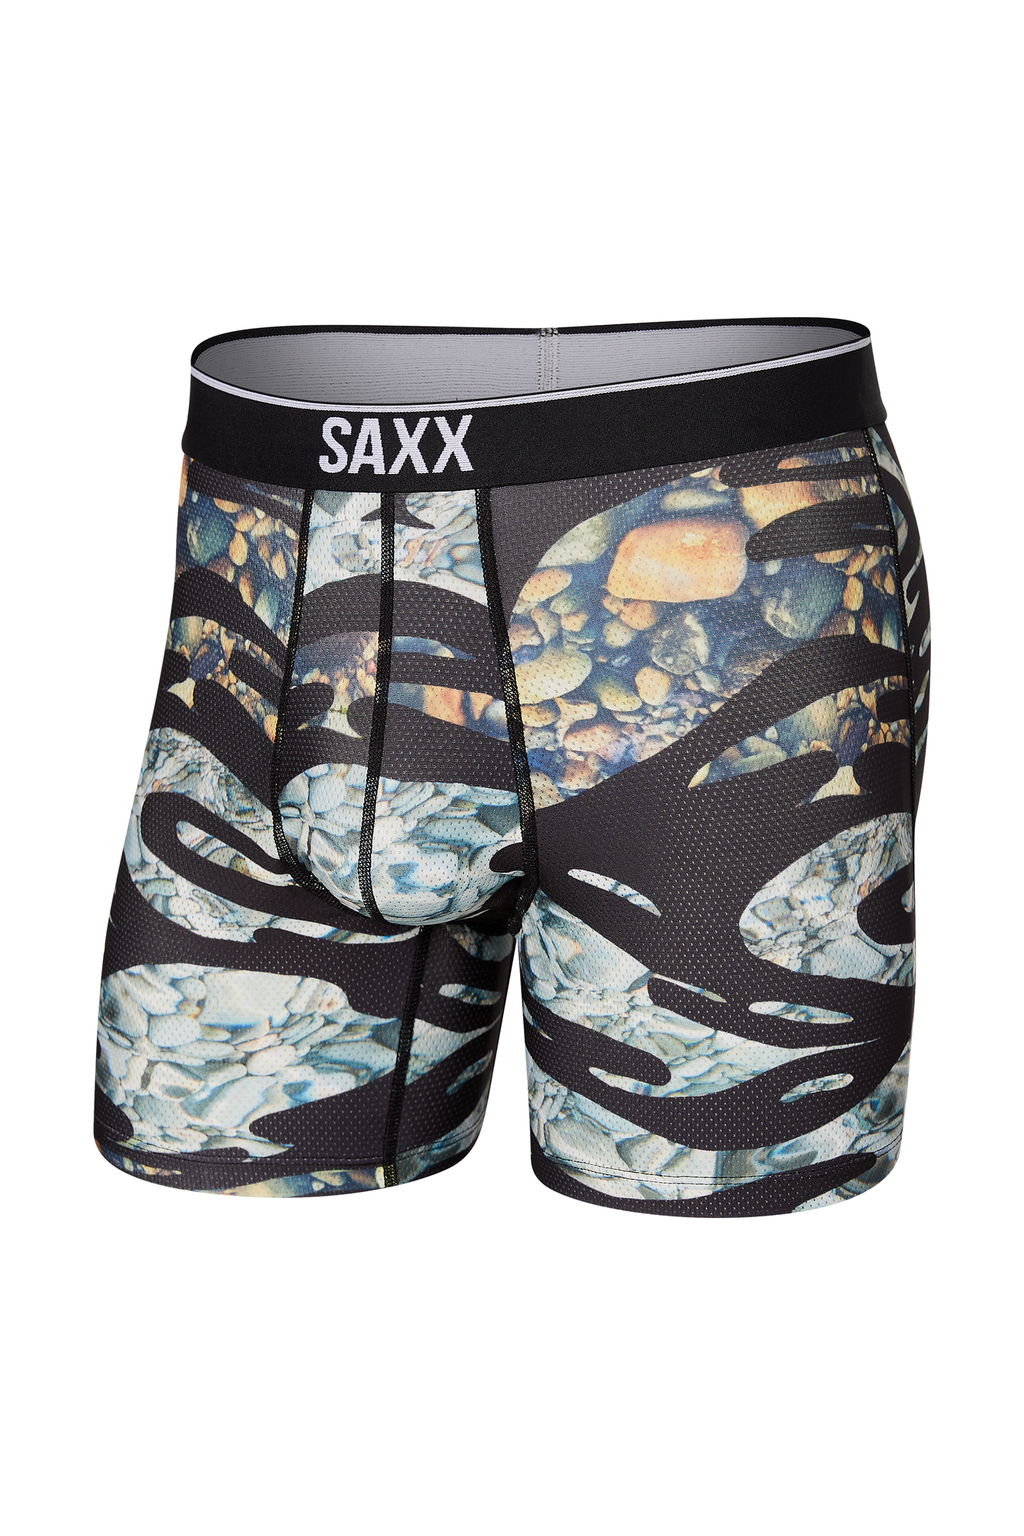 Saxx Volt Sport Boxer Brief - Style SXBB29-RCC